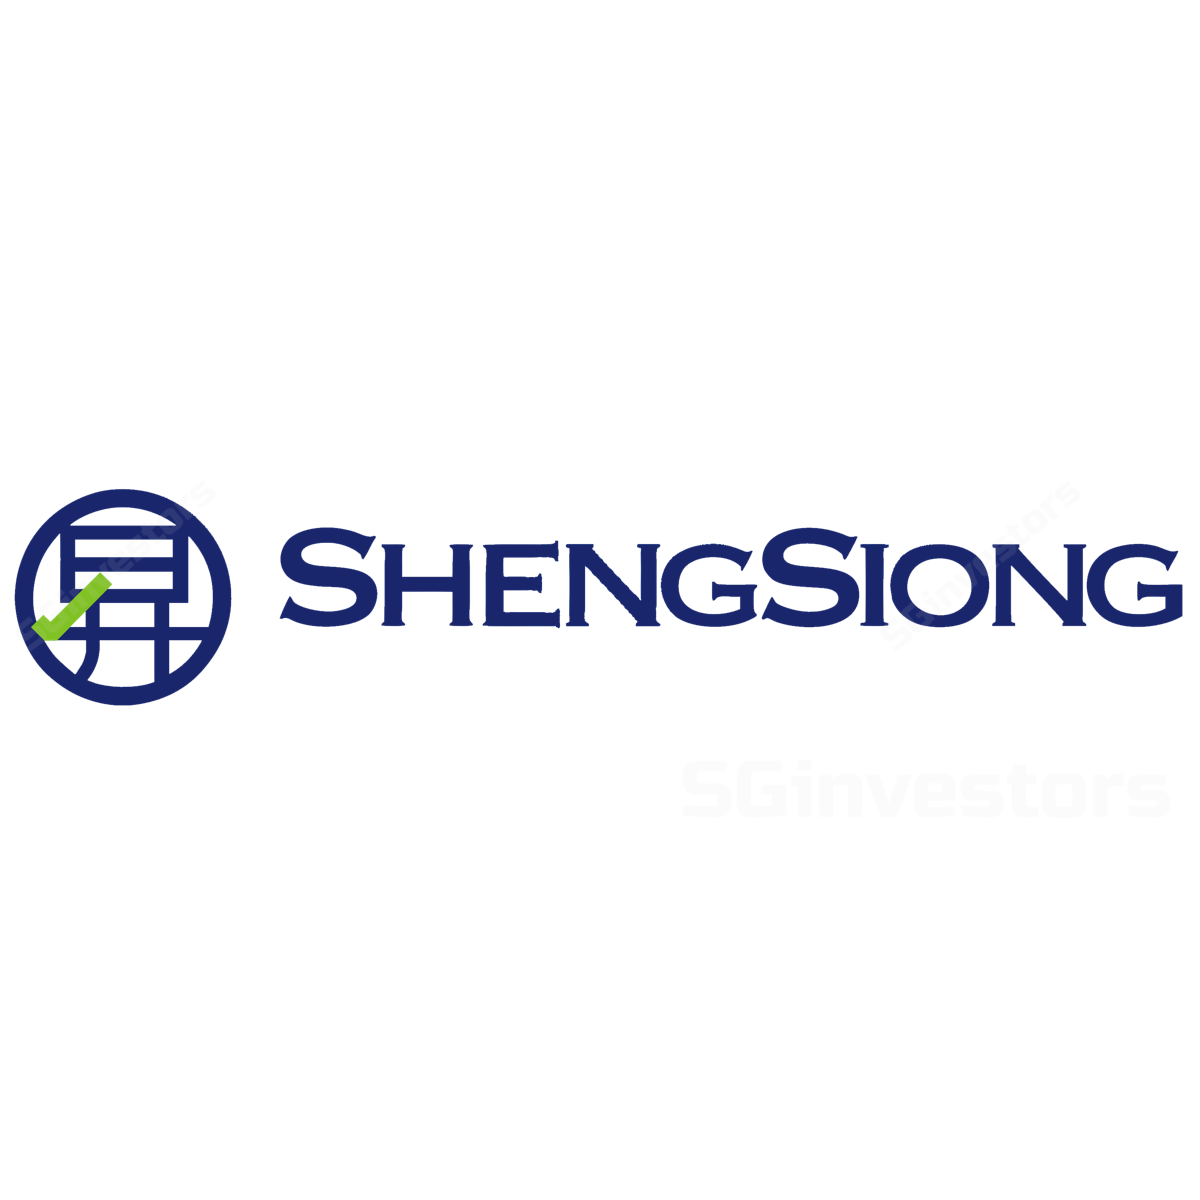 Sheng Siong Group - Maybank Kim Eng 2018-05-01: Positive Prospects And Ndr Highlights